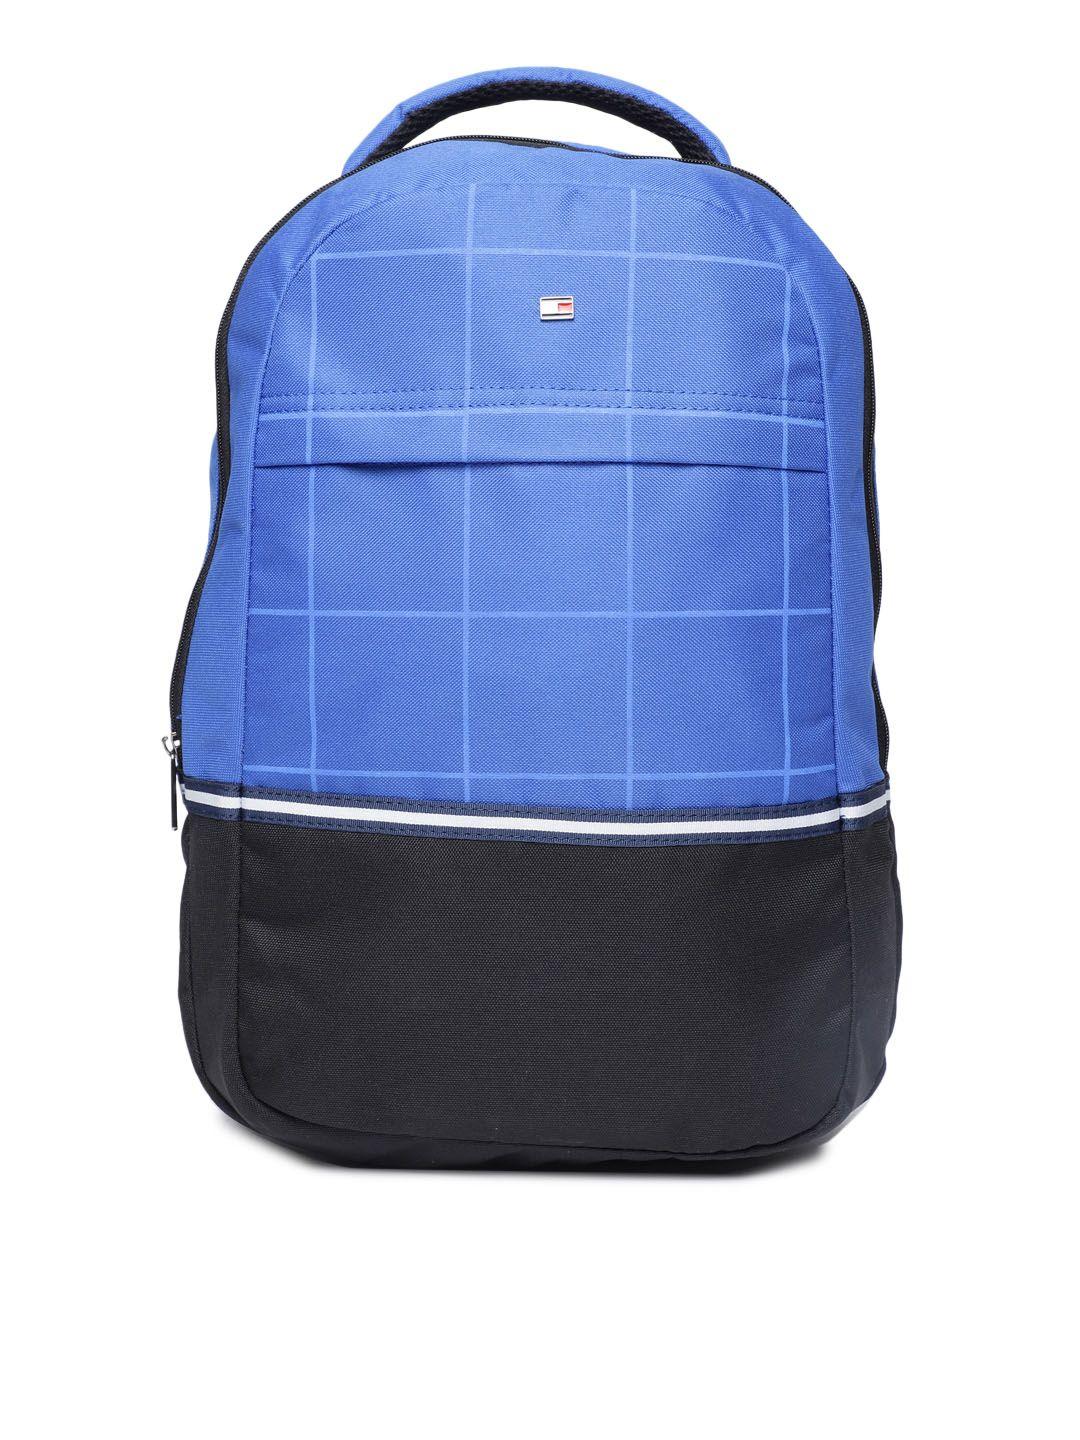 tommy hilfiger unisex blue & black colourblocked backpack